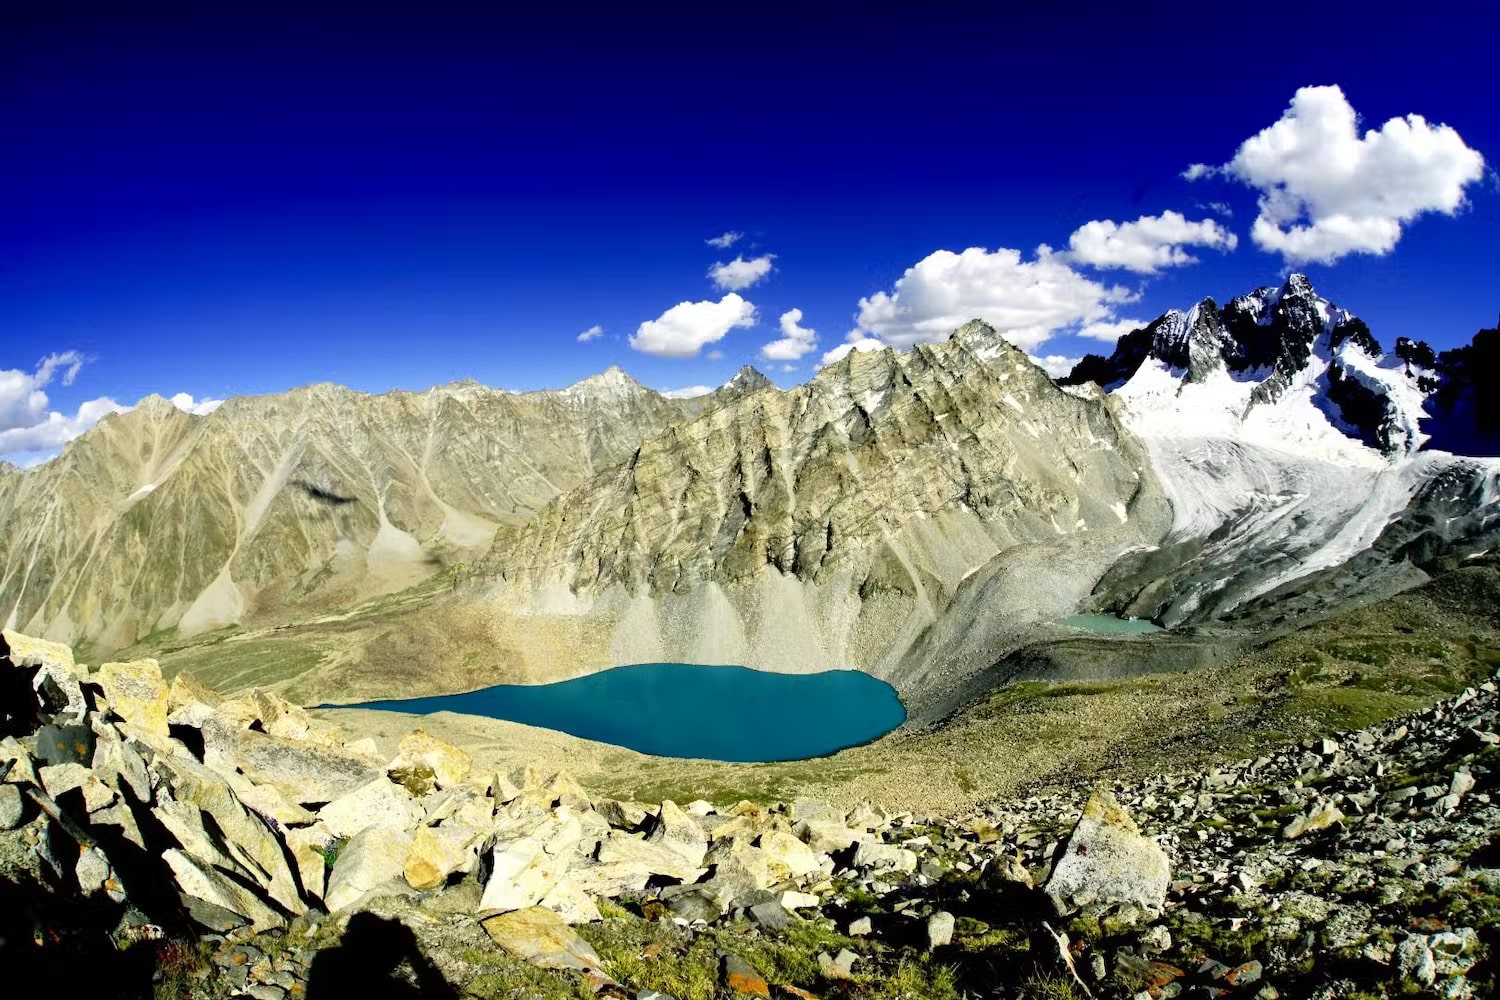 barah-broq-lake-pakistan-tours-eye-shaped-lake